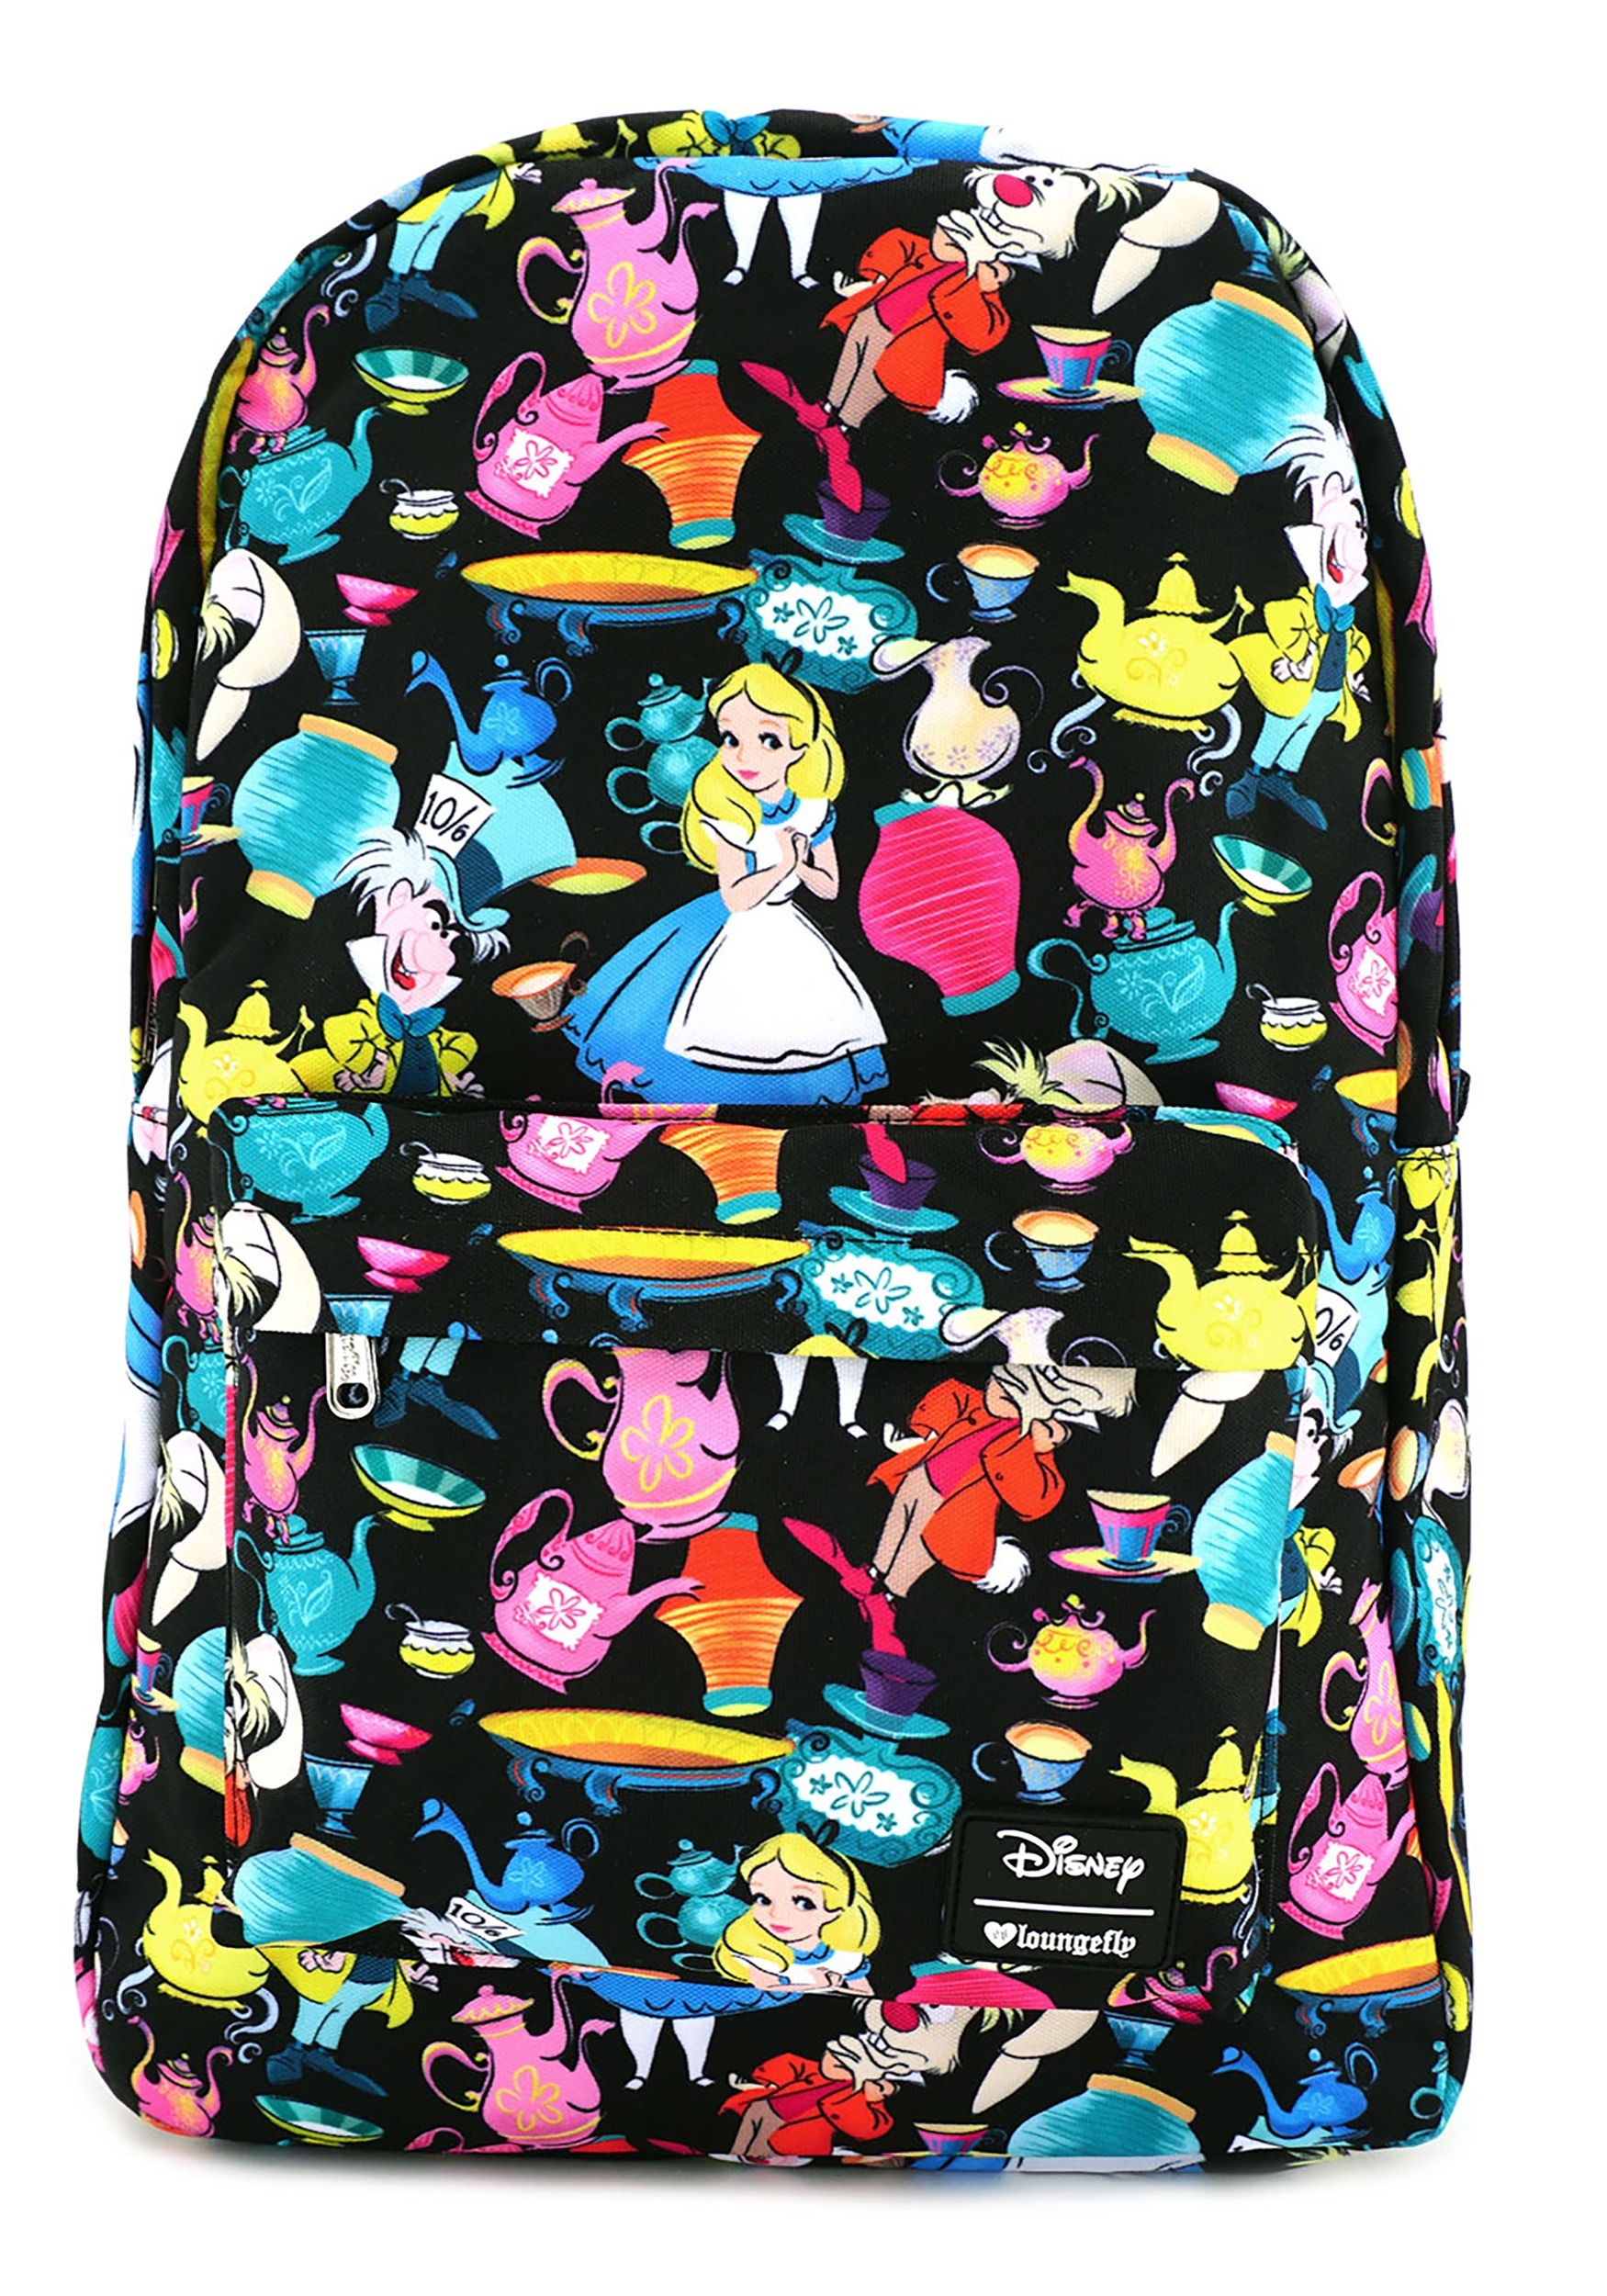 Loungefly Alice in Wonderland Backpack